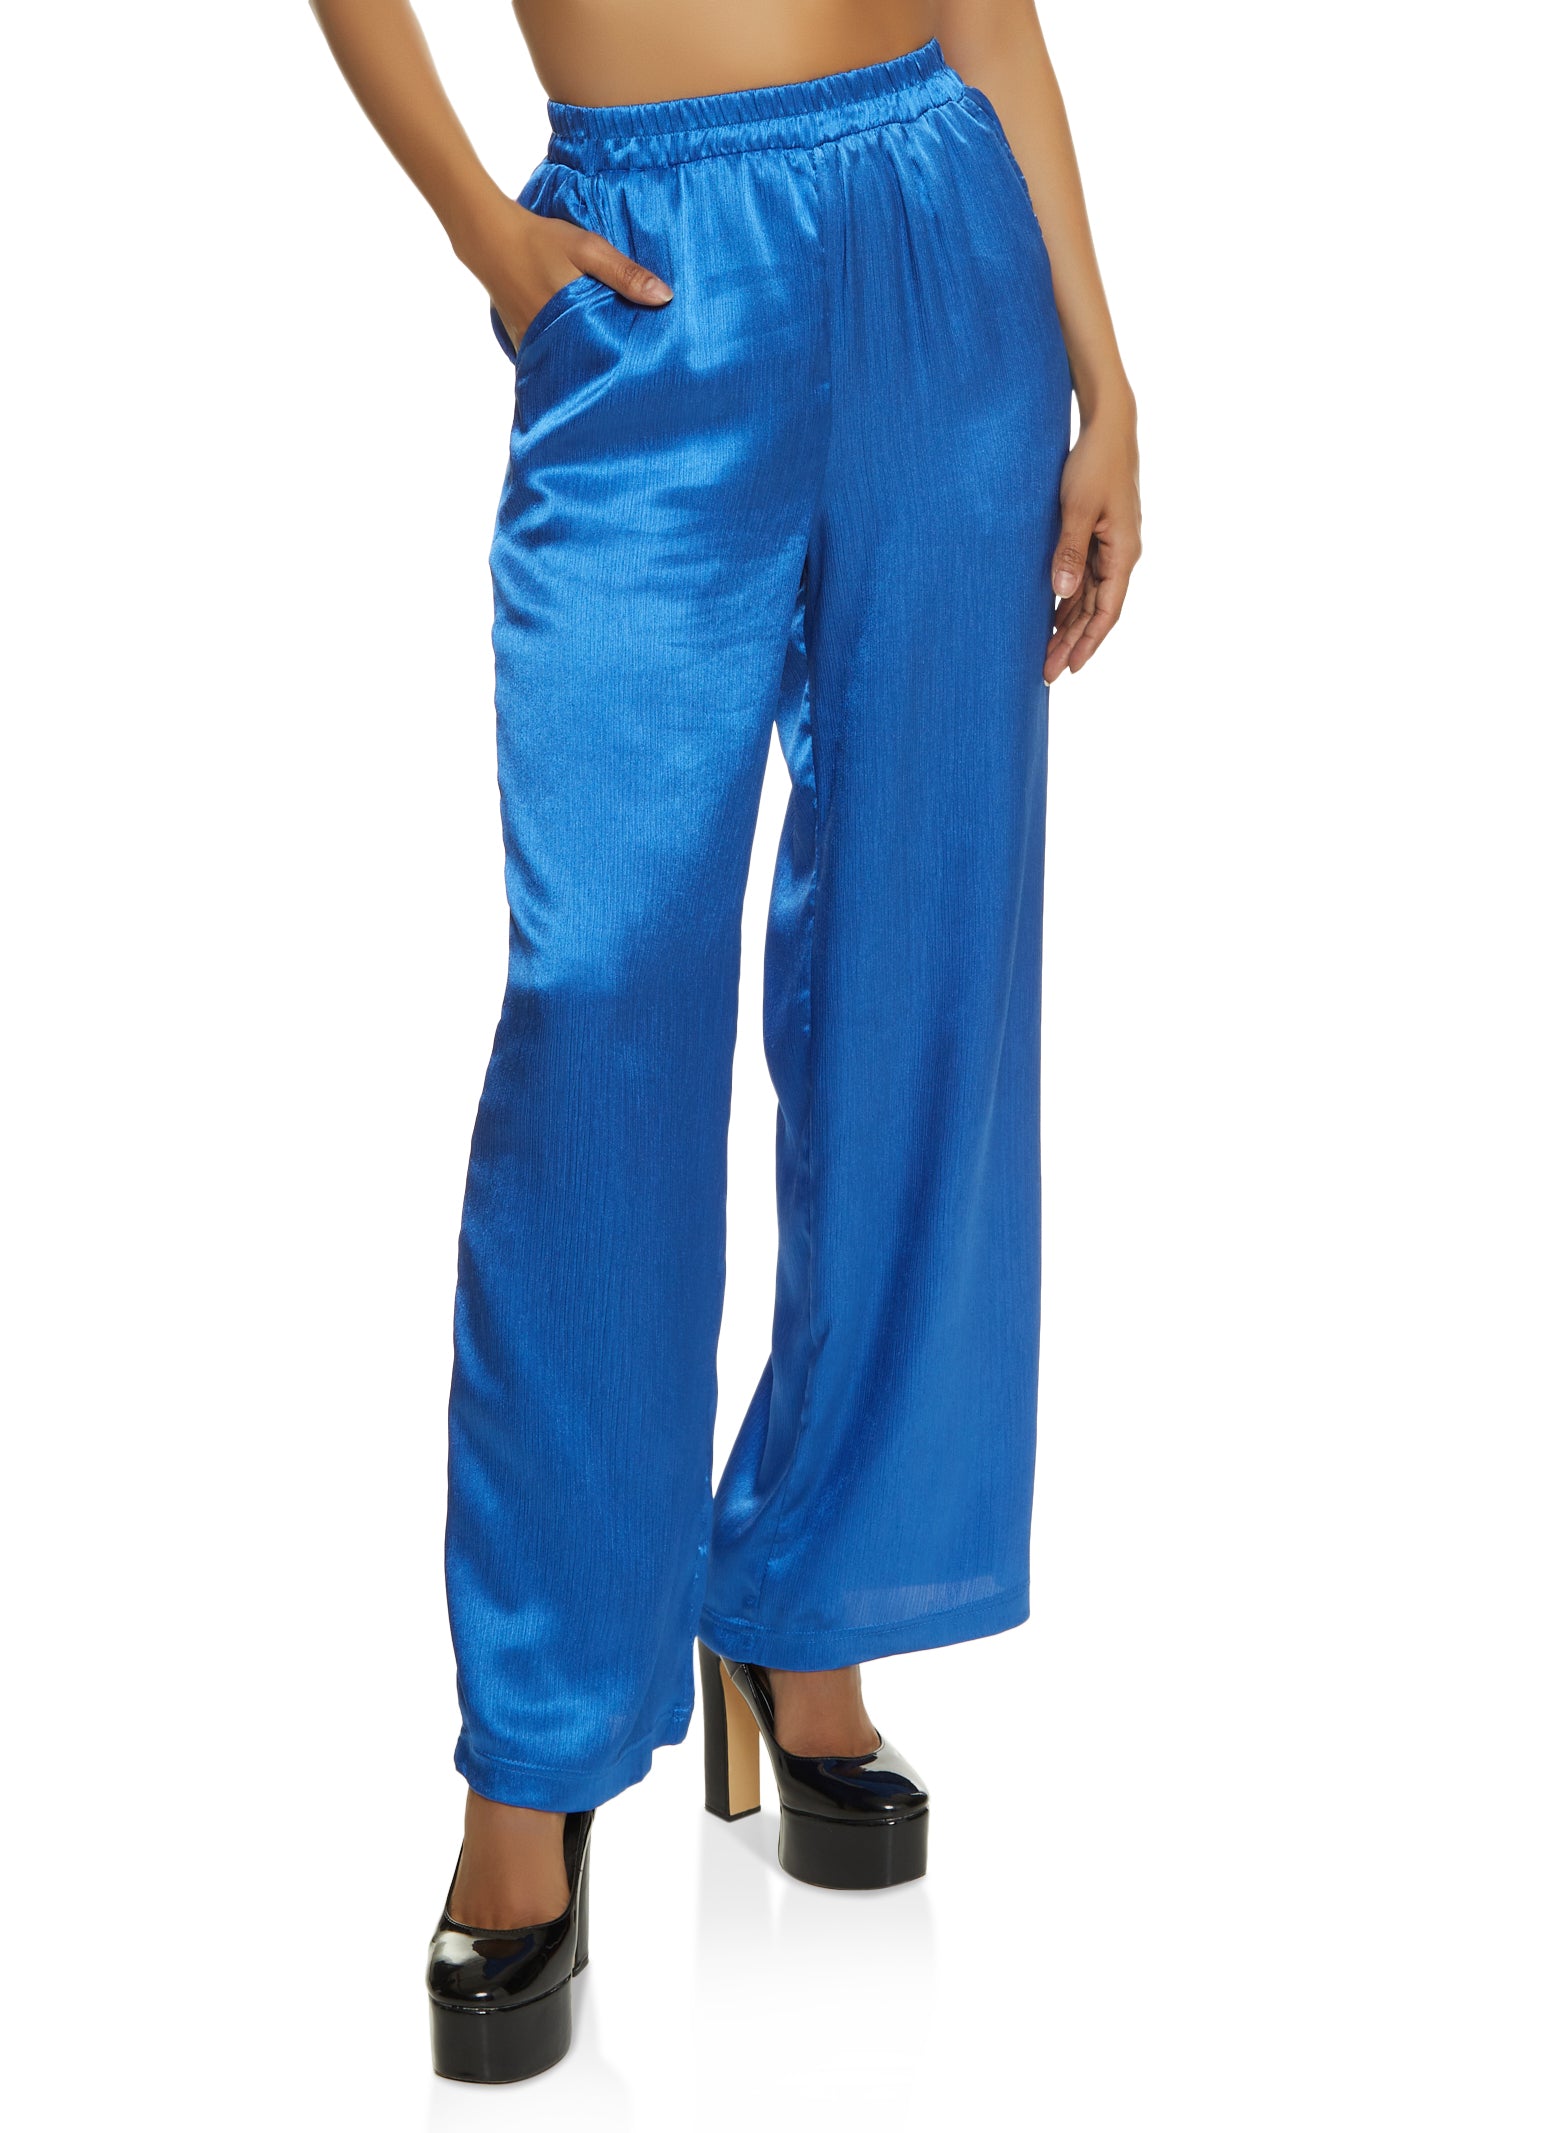 Buy MUNAFIE Belly Dance Arab Carnival Satin Pants Light Blue at Amazon.in